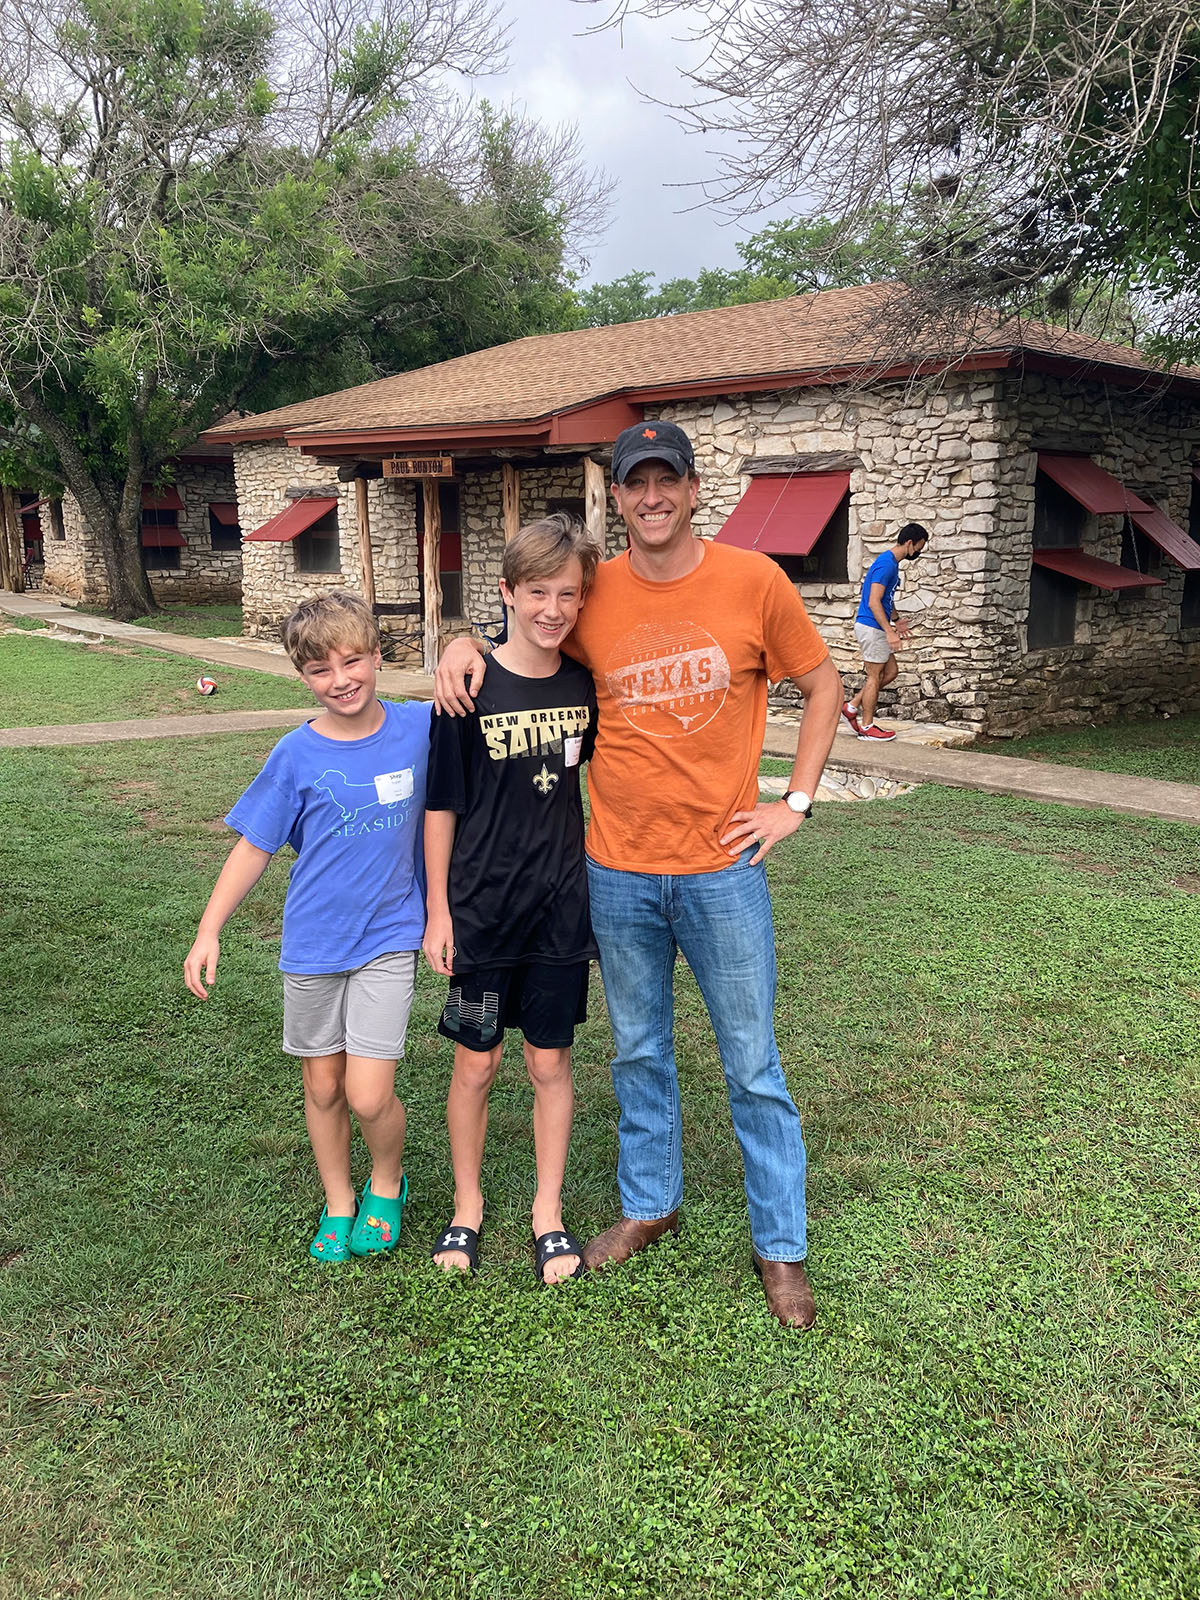 Rob Frazer and his sons at camp rio vista